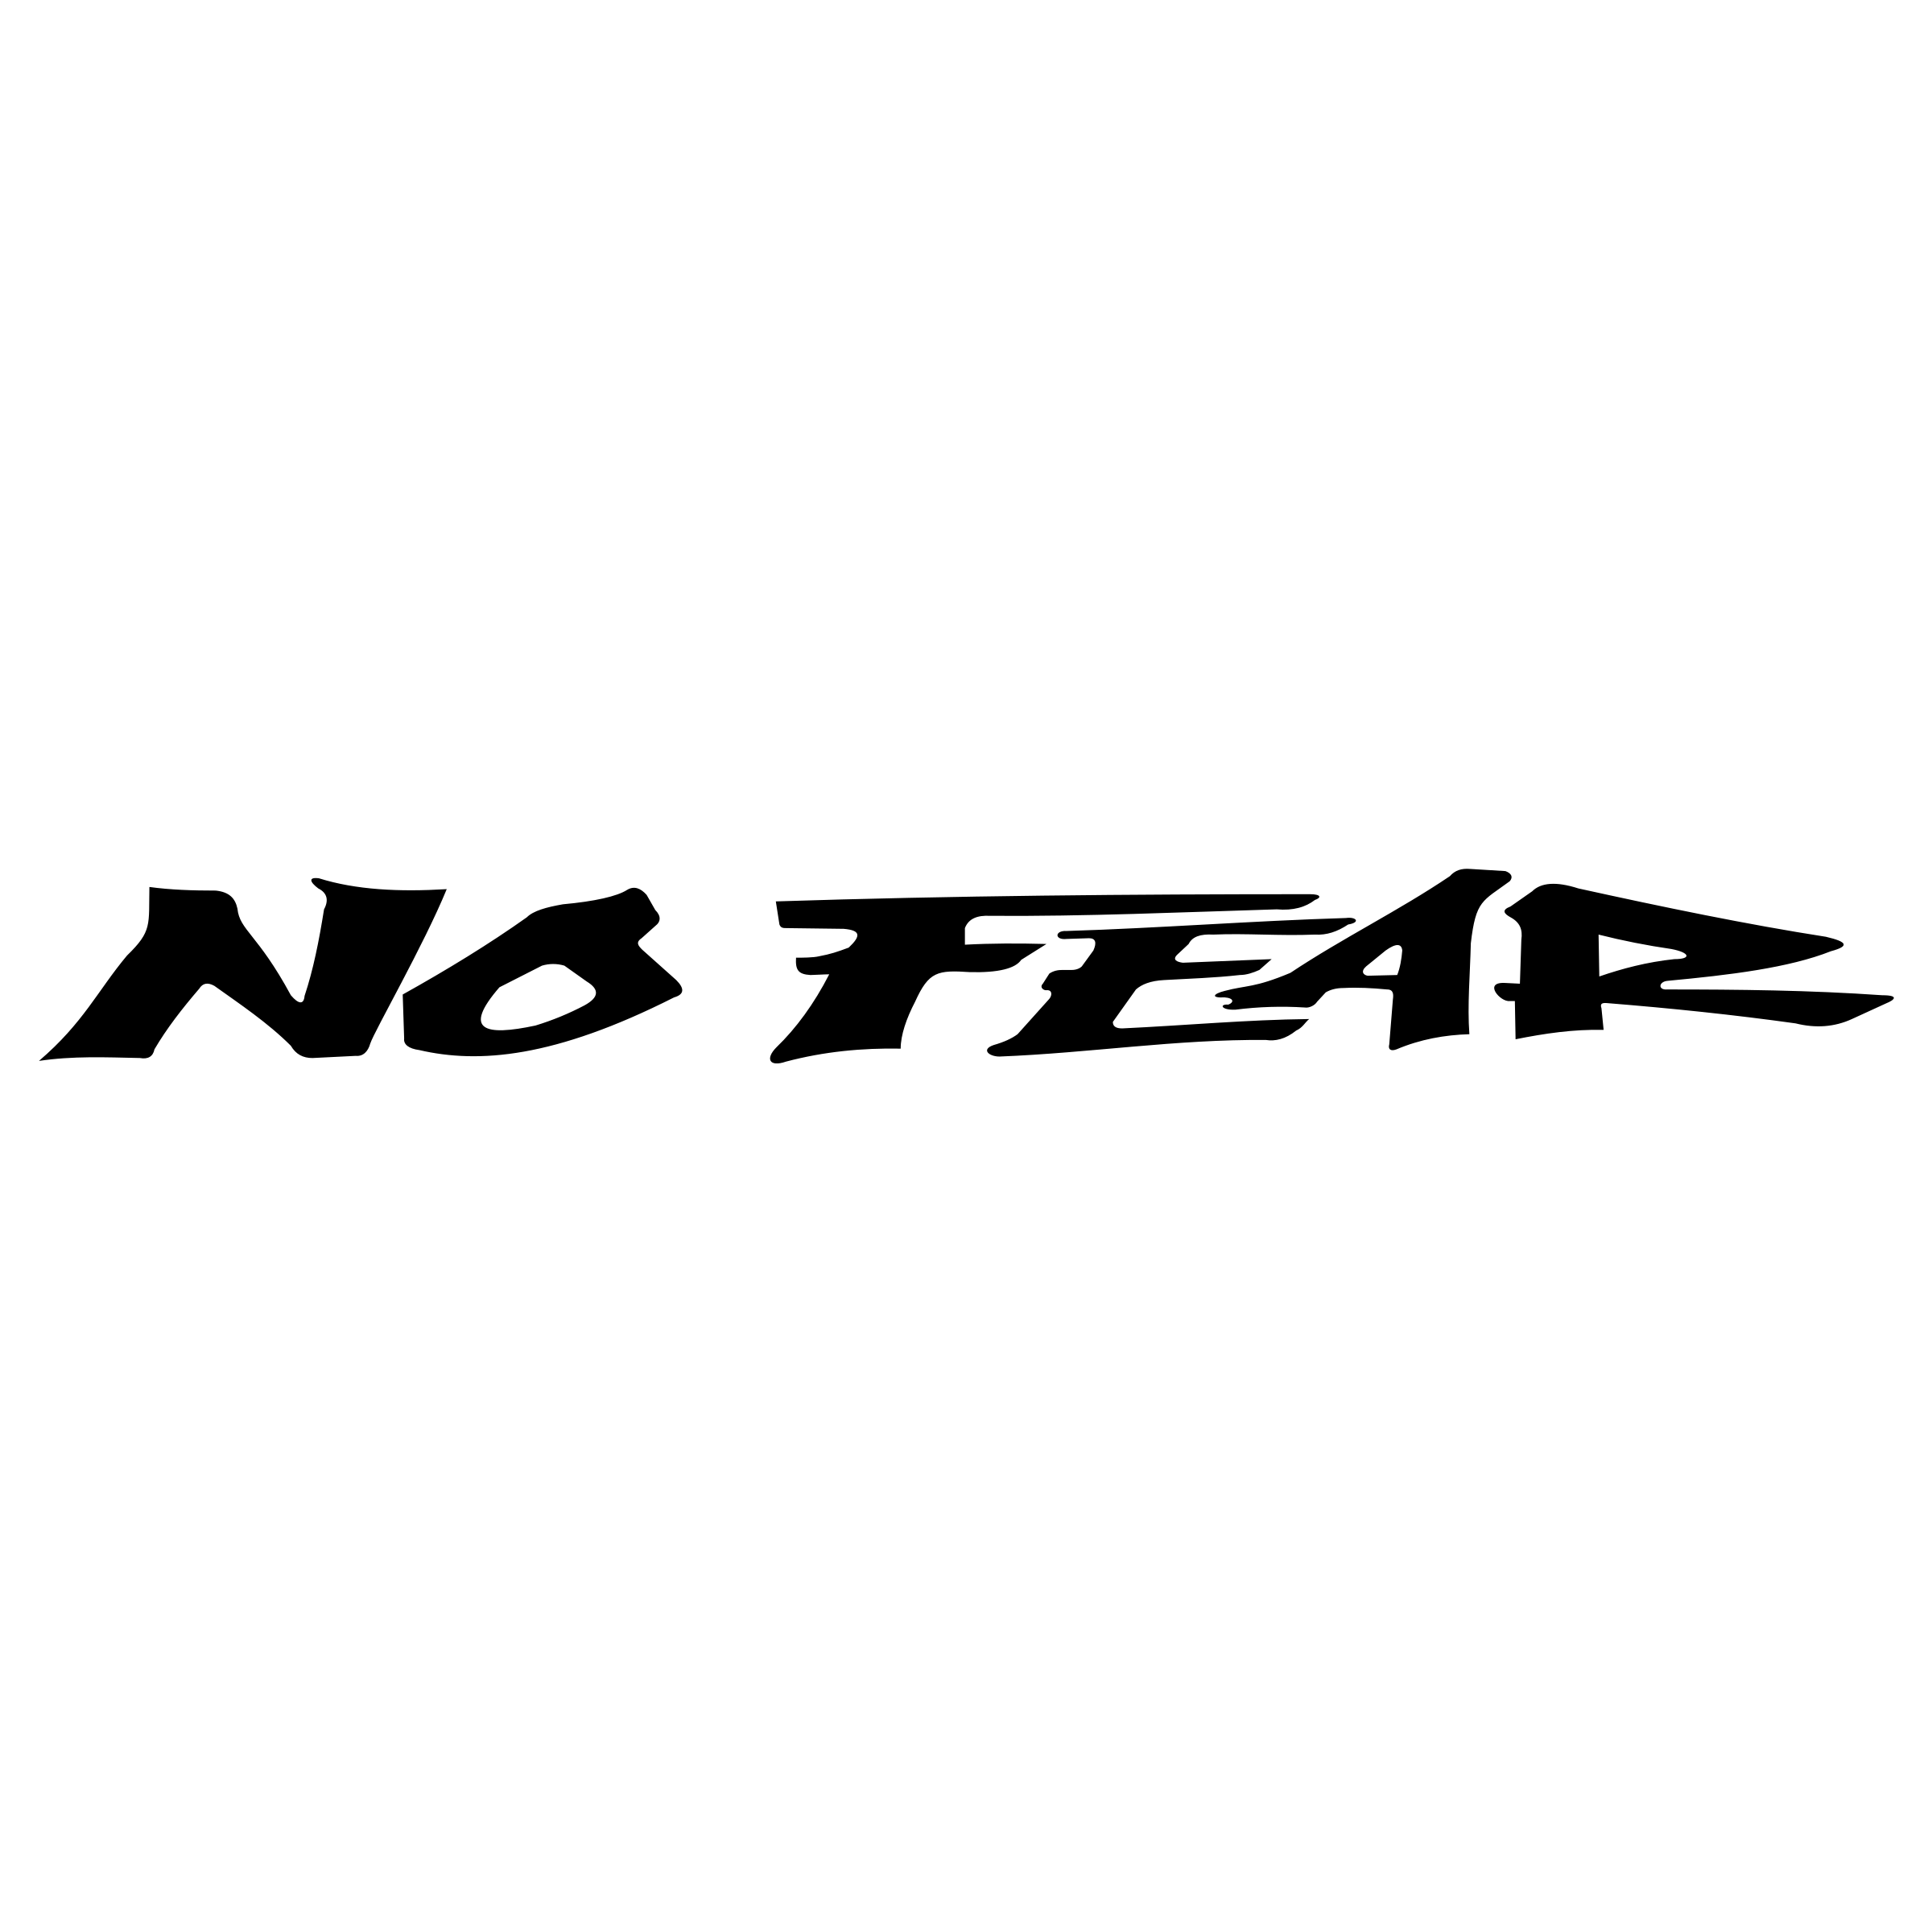 The No Fear Logo - No Fear Logo PNG Transparent & SVG Vector - Freebie Supply